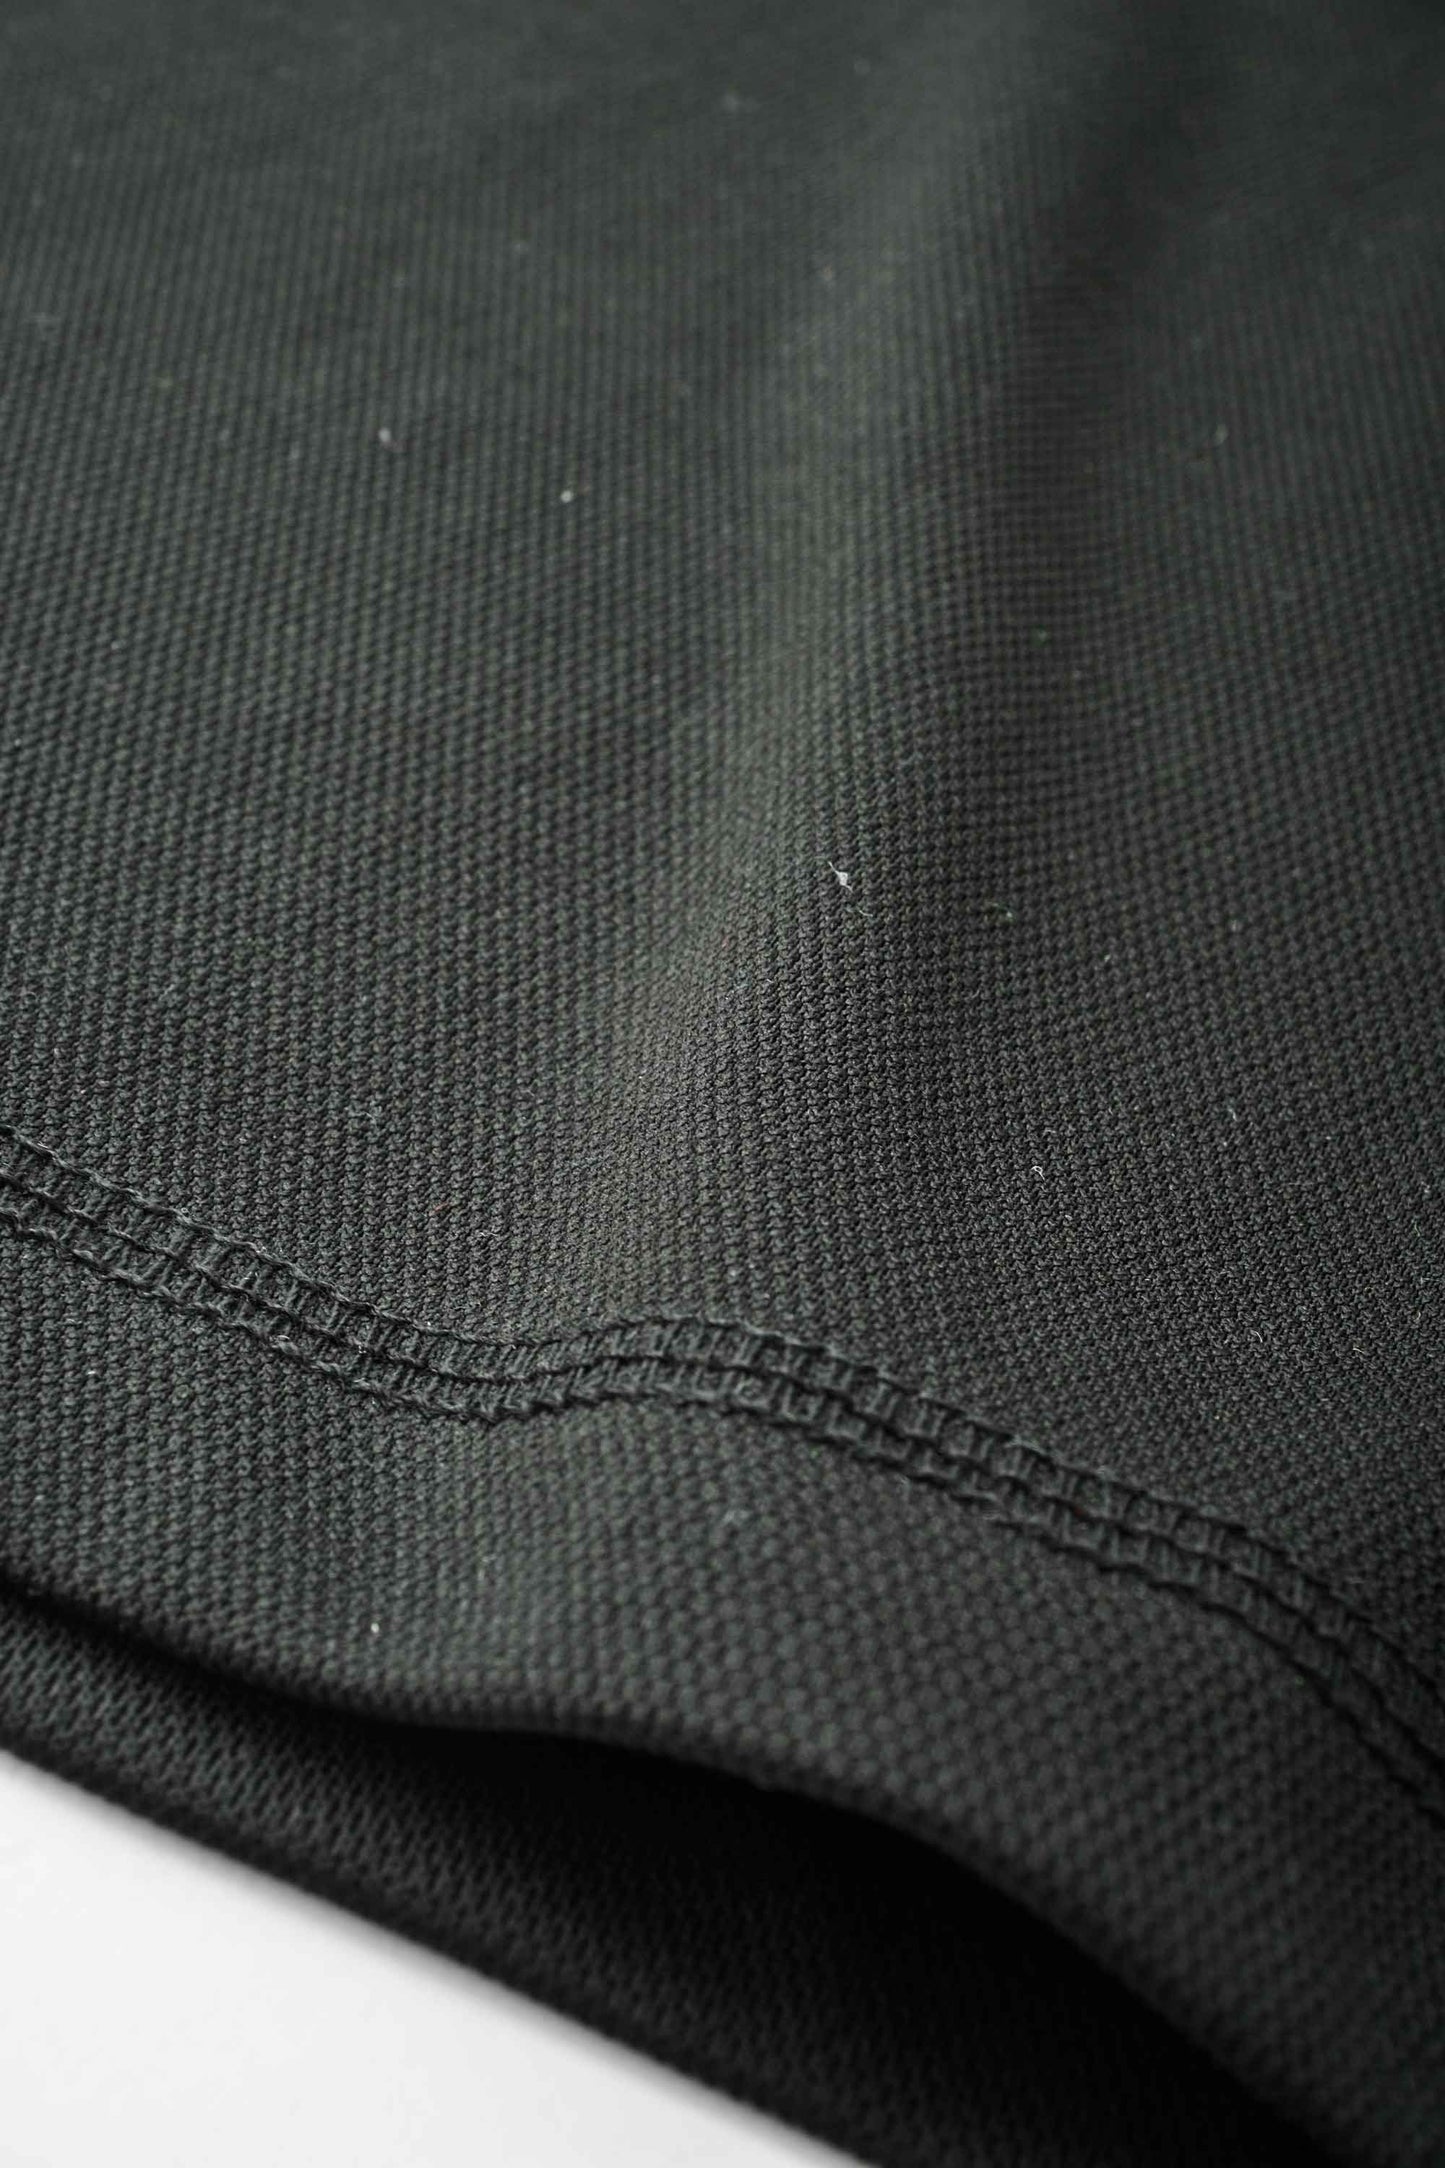 K Prime Men's Reglan Sleeve Solid Design Minor Fault Tee Shirt